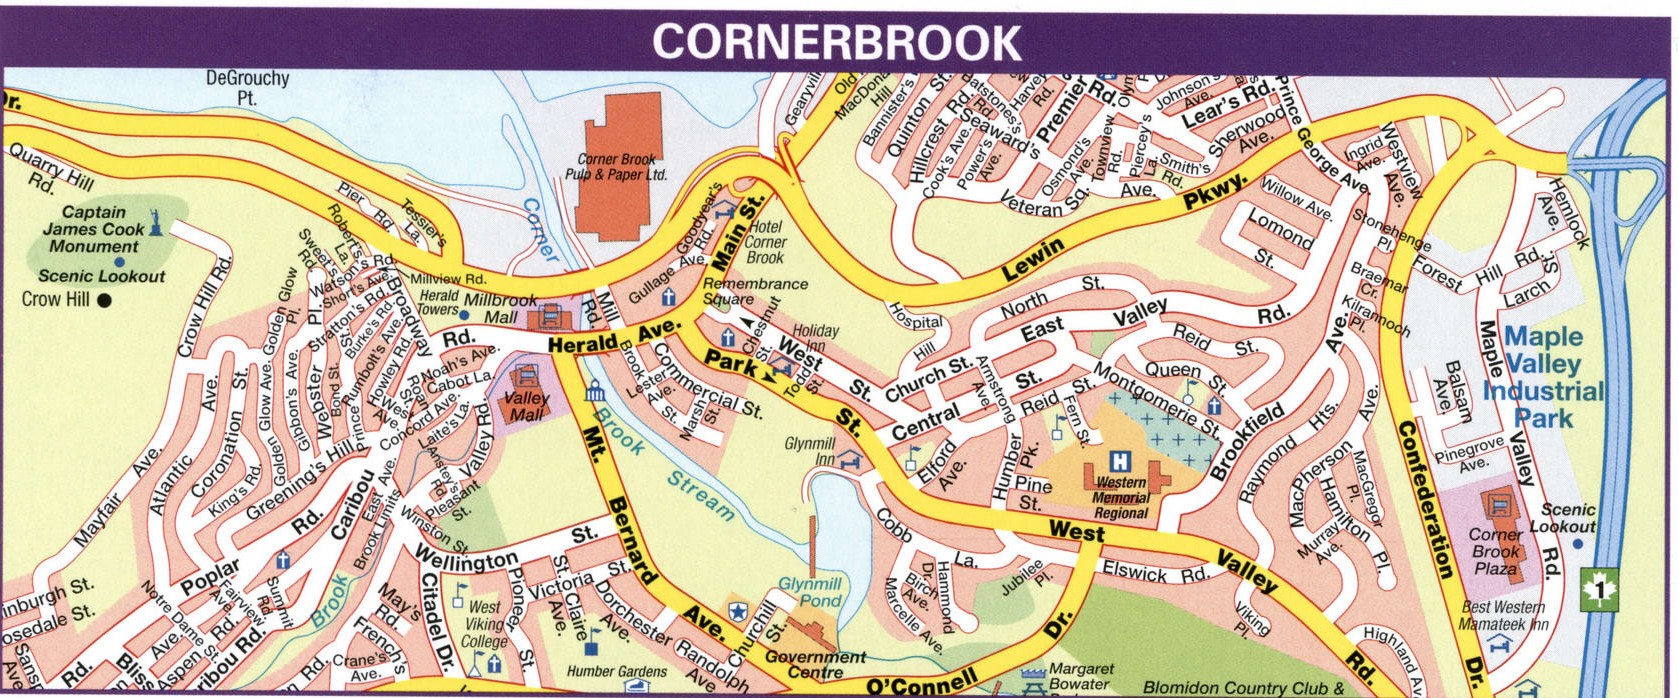 Cornnerbrook road map